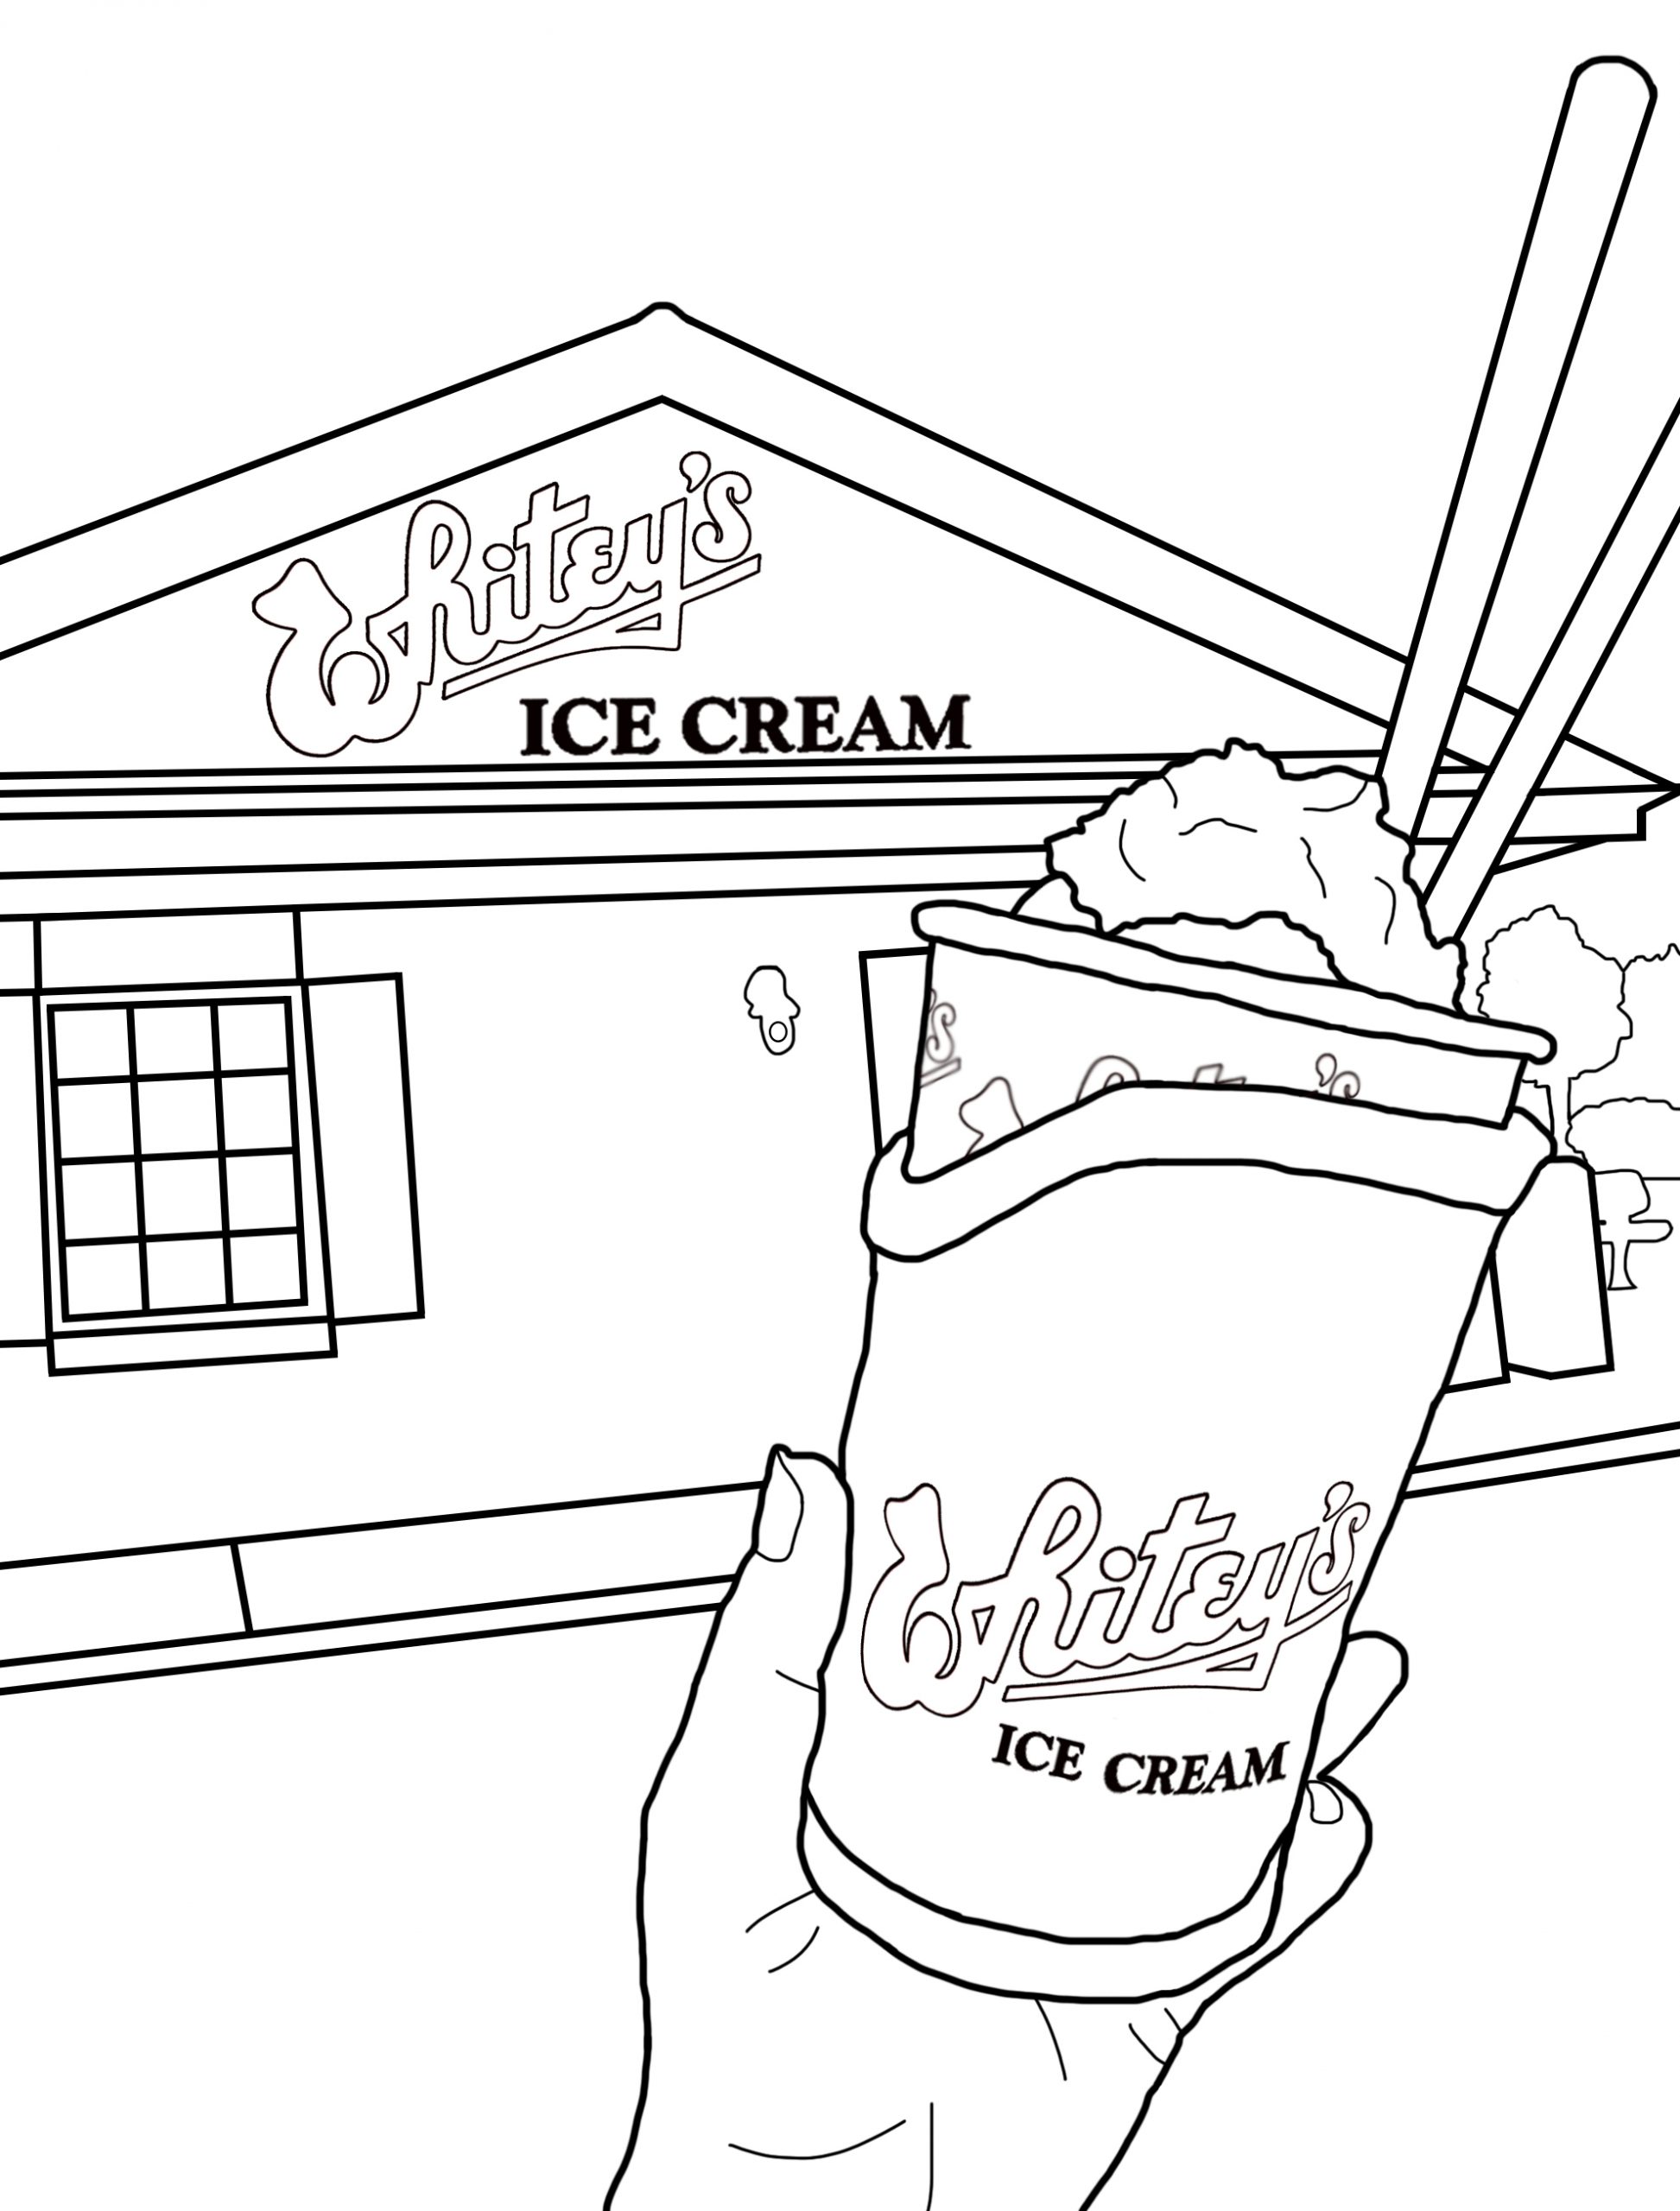 Whitey's Ice Cream Coloring Pages - Whitey's Ice Cream